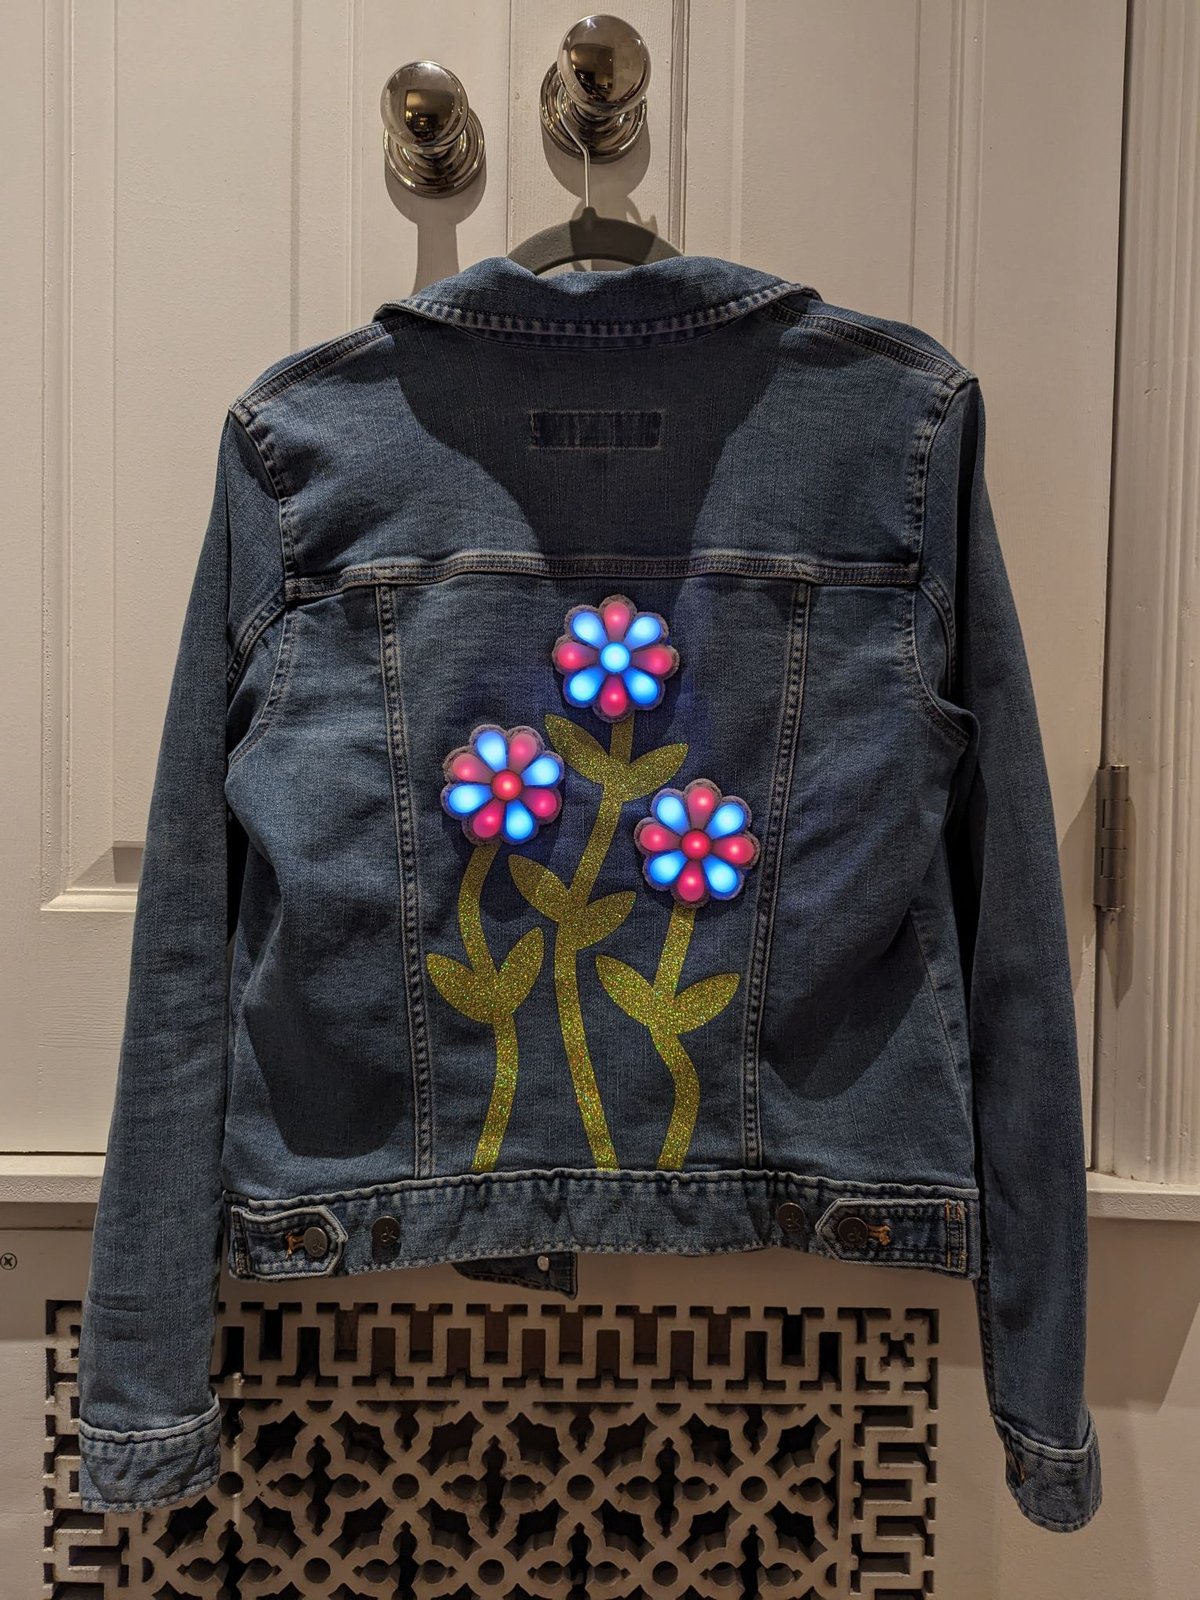 Debra Ansell's Flower Jacket